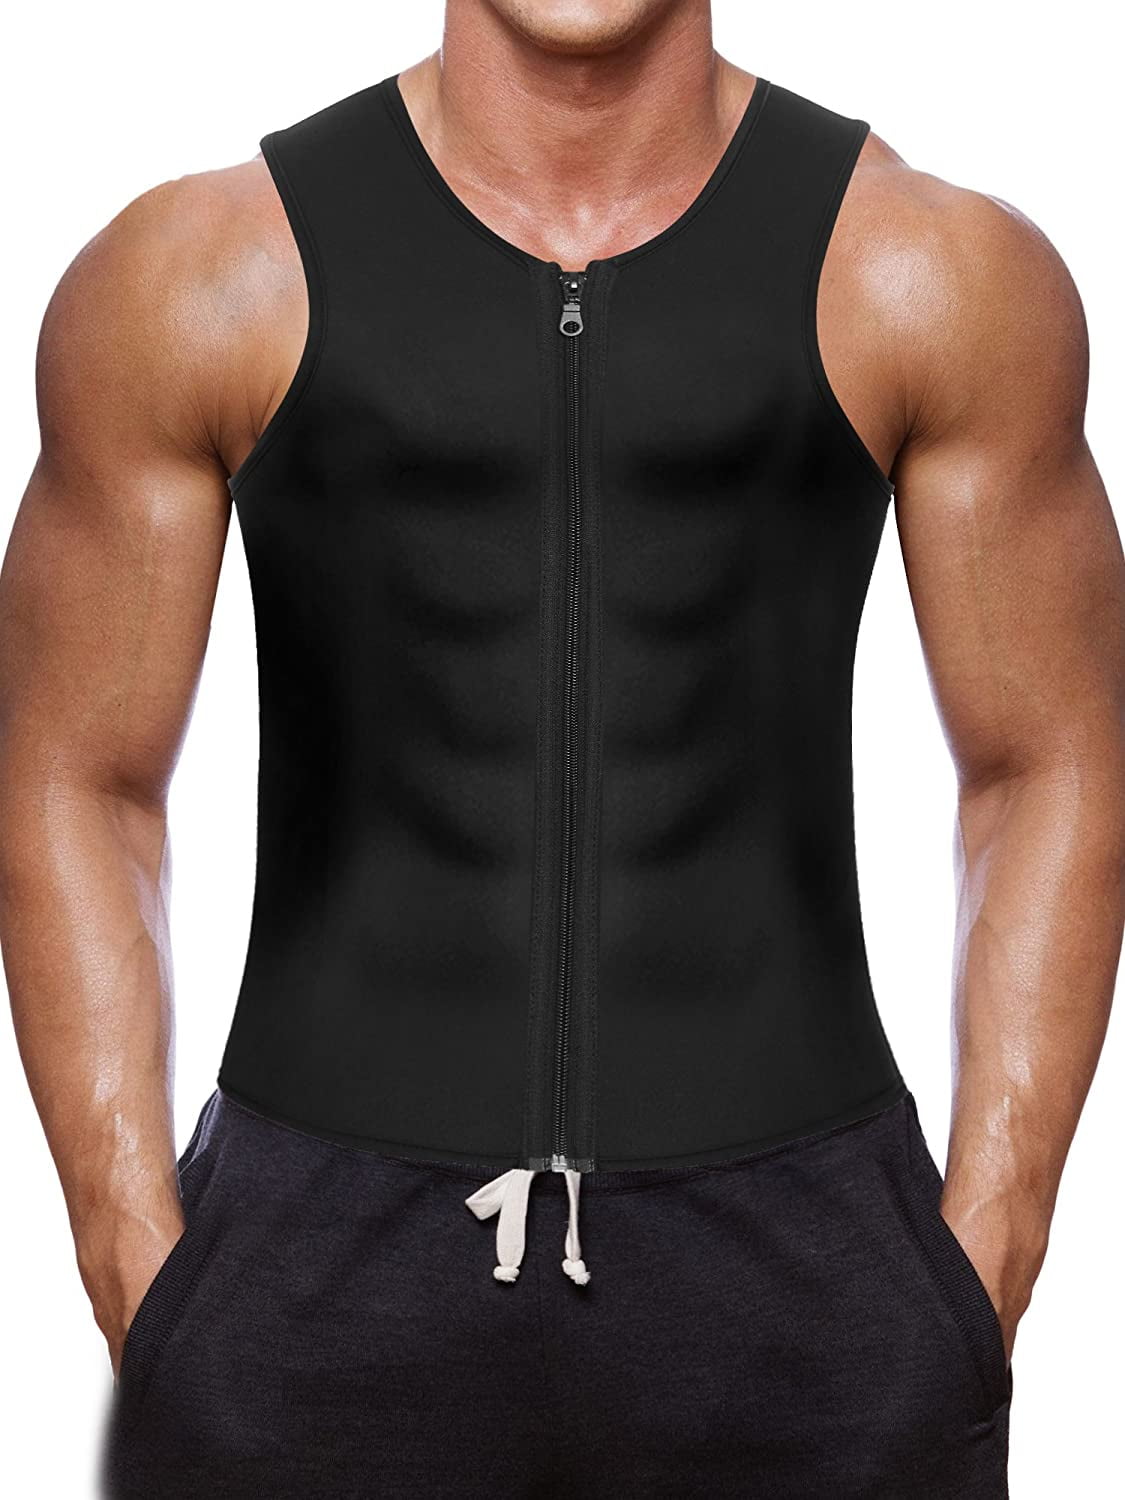 Waist Trainer Vest for Men Weight Loss Tummy Control Sauna Tank Top Body Shaper